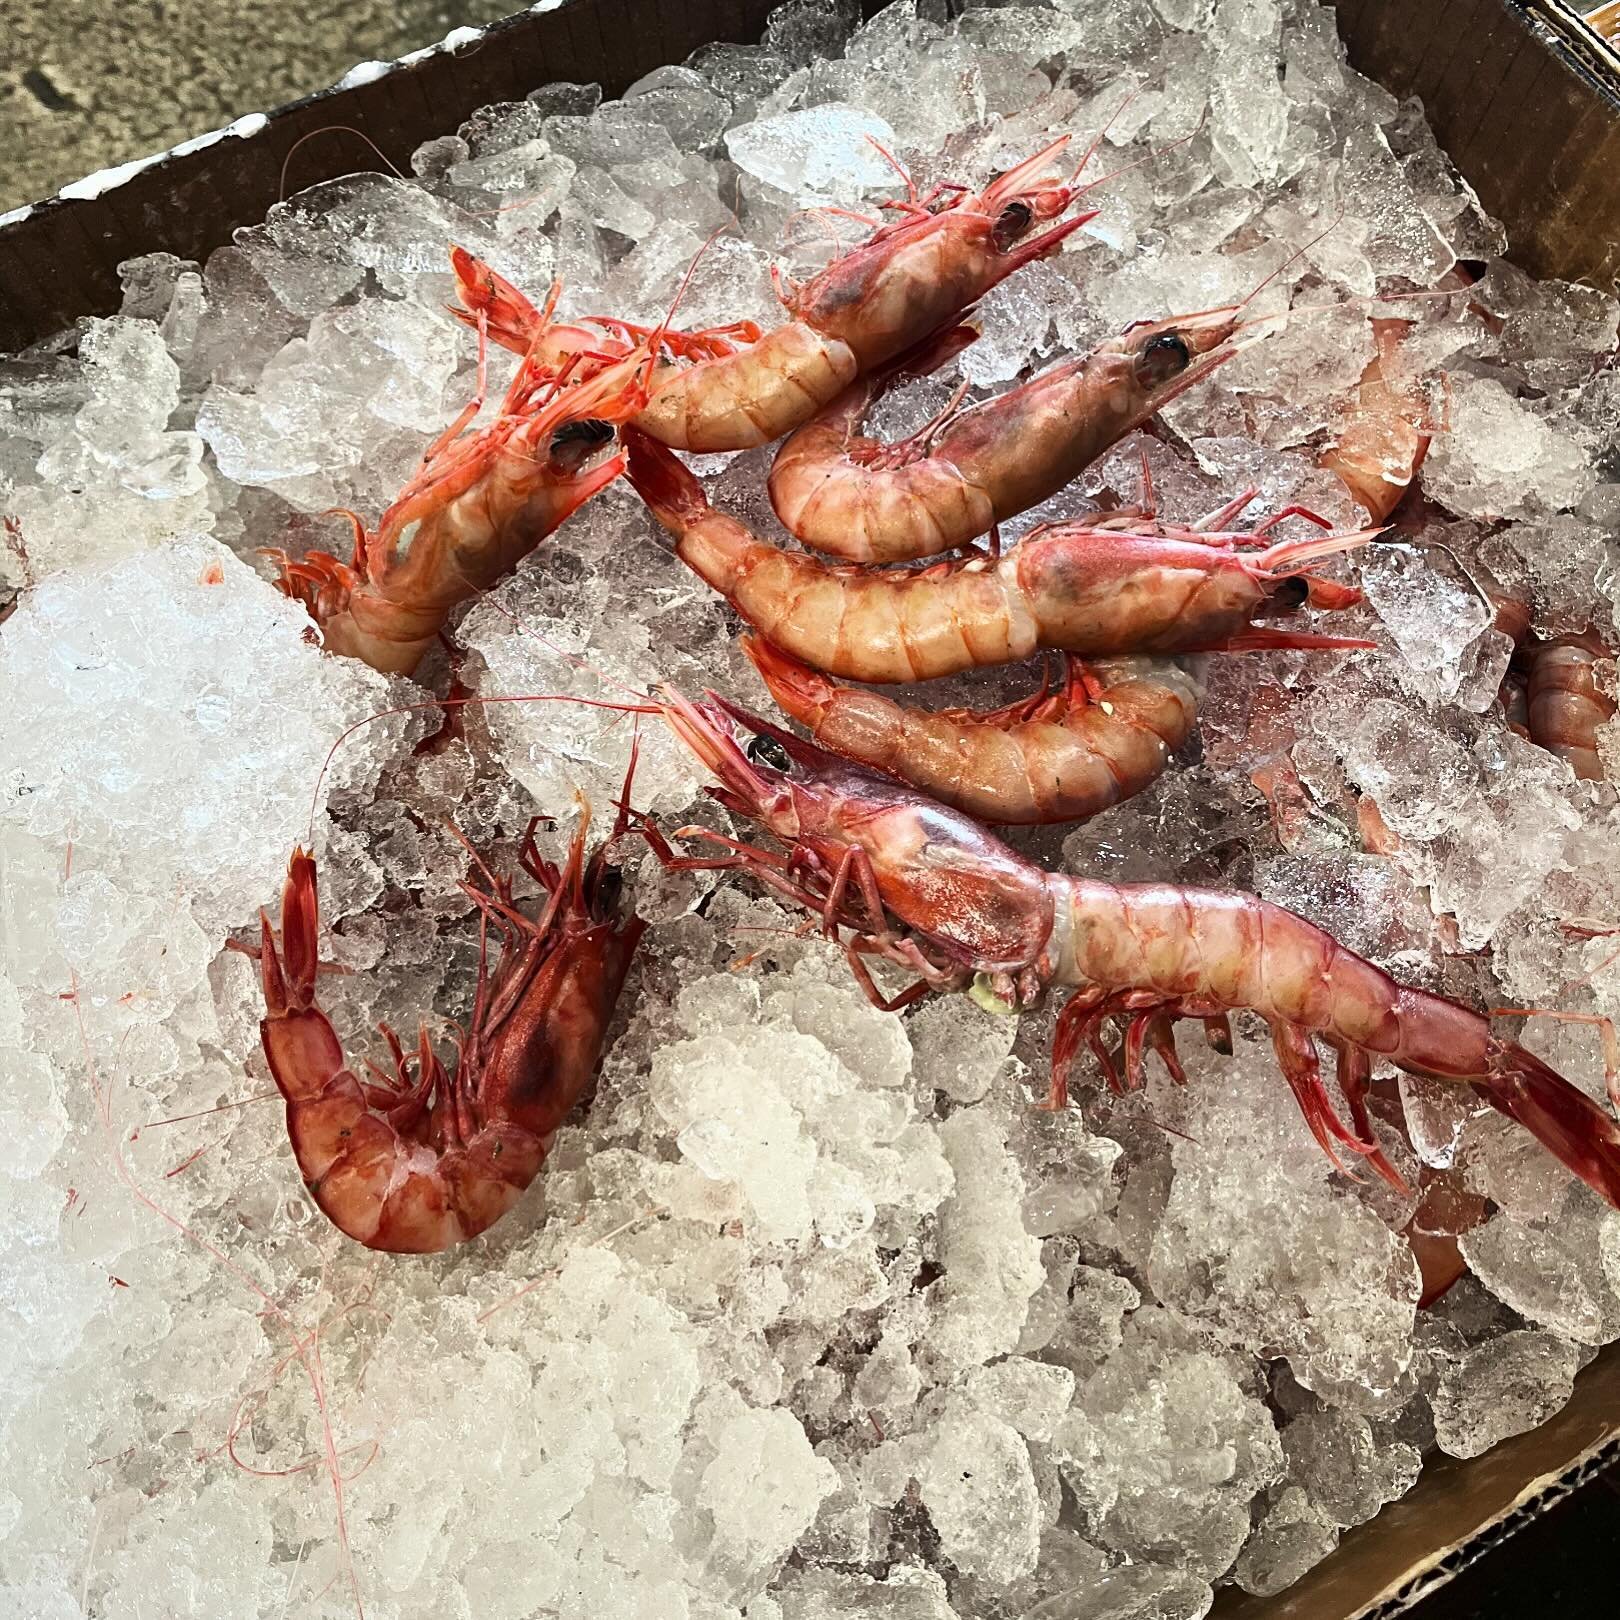 Montauk Red Shrimp on the menu tonight! 🦐
And yes, they are actually local shrimp! 

#stonecreekinn #redshrimp #localseafood #eastquogue #hamptons #hamptonsrestaurants #longislandrestaurants